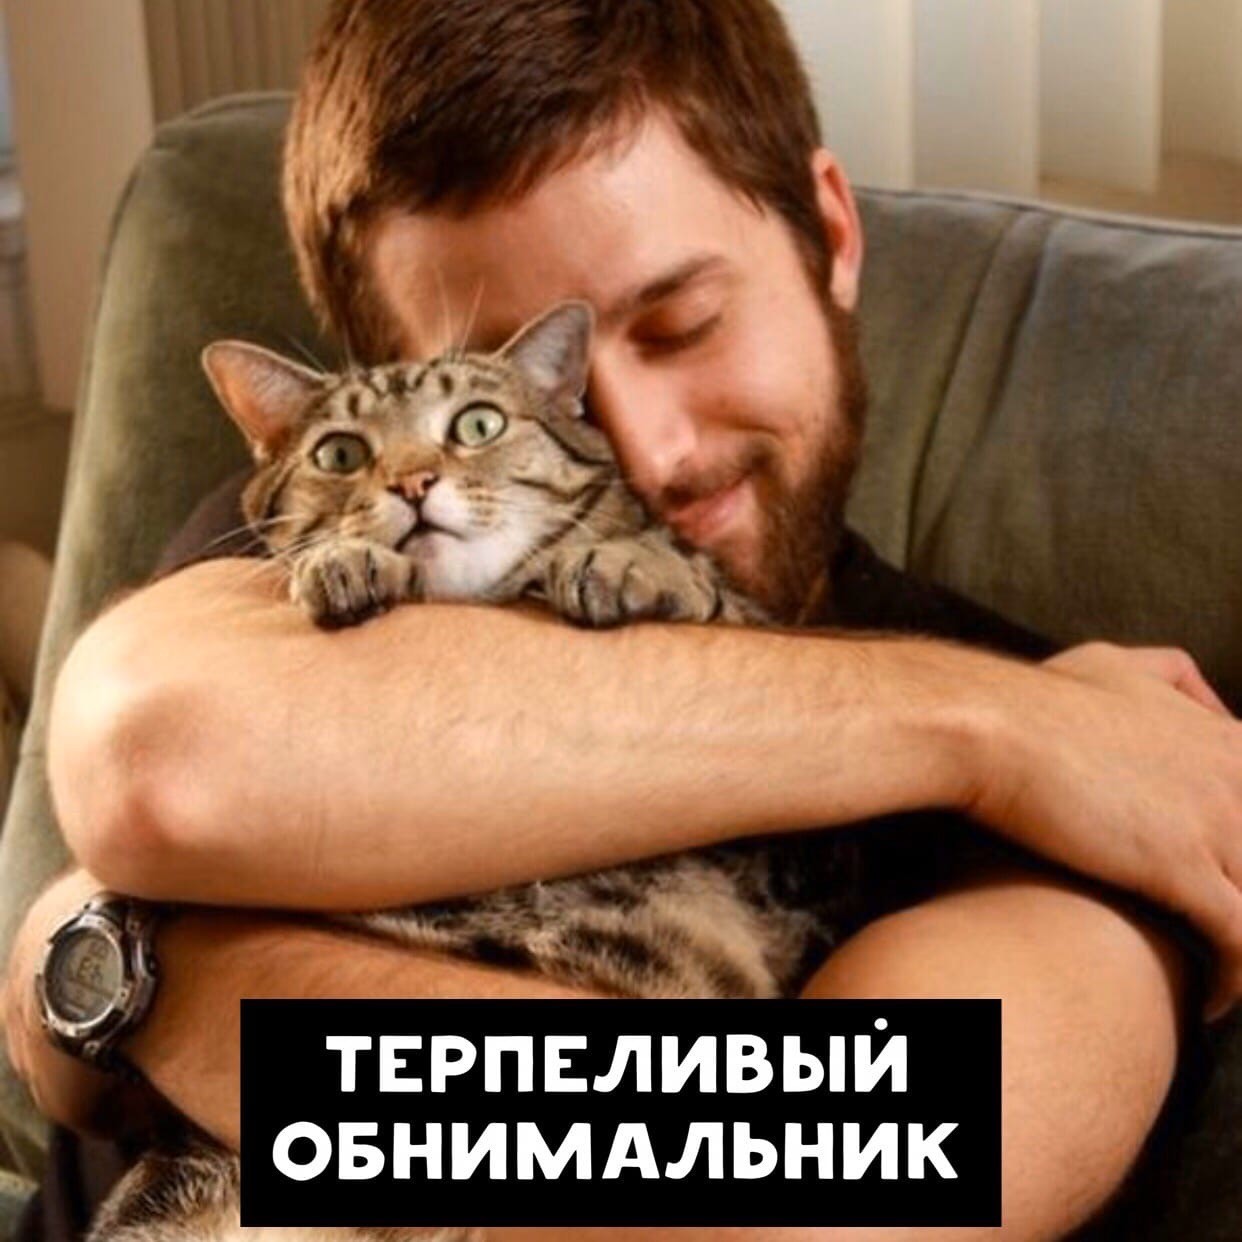 Мужчина любящий кошку. Кот обнимает. Мужчина обнимает кота. Человек обнимает. Кот обнимает человека.